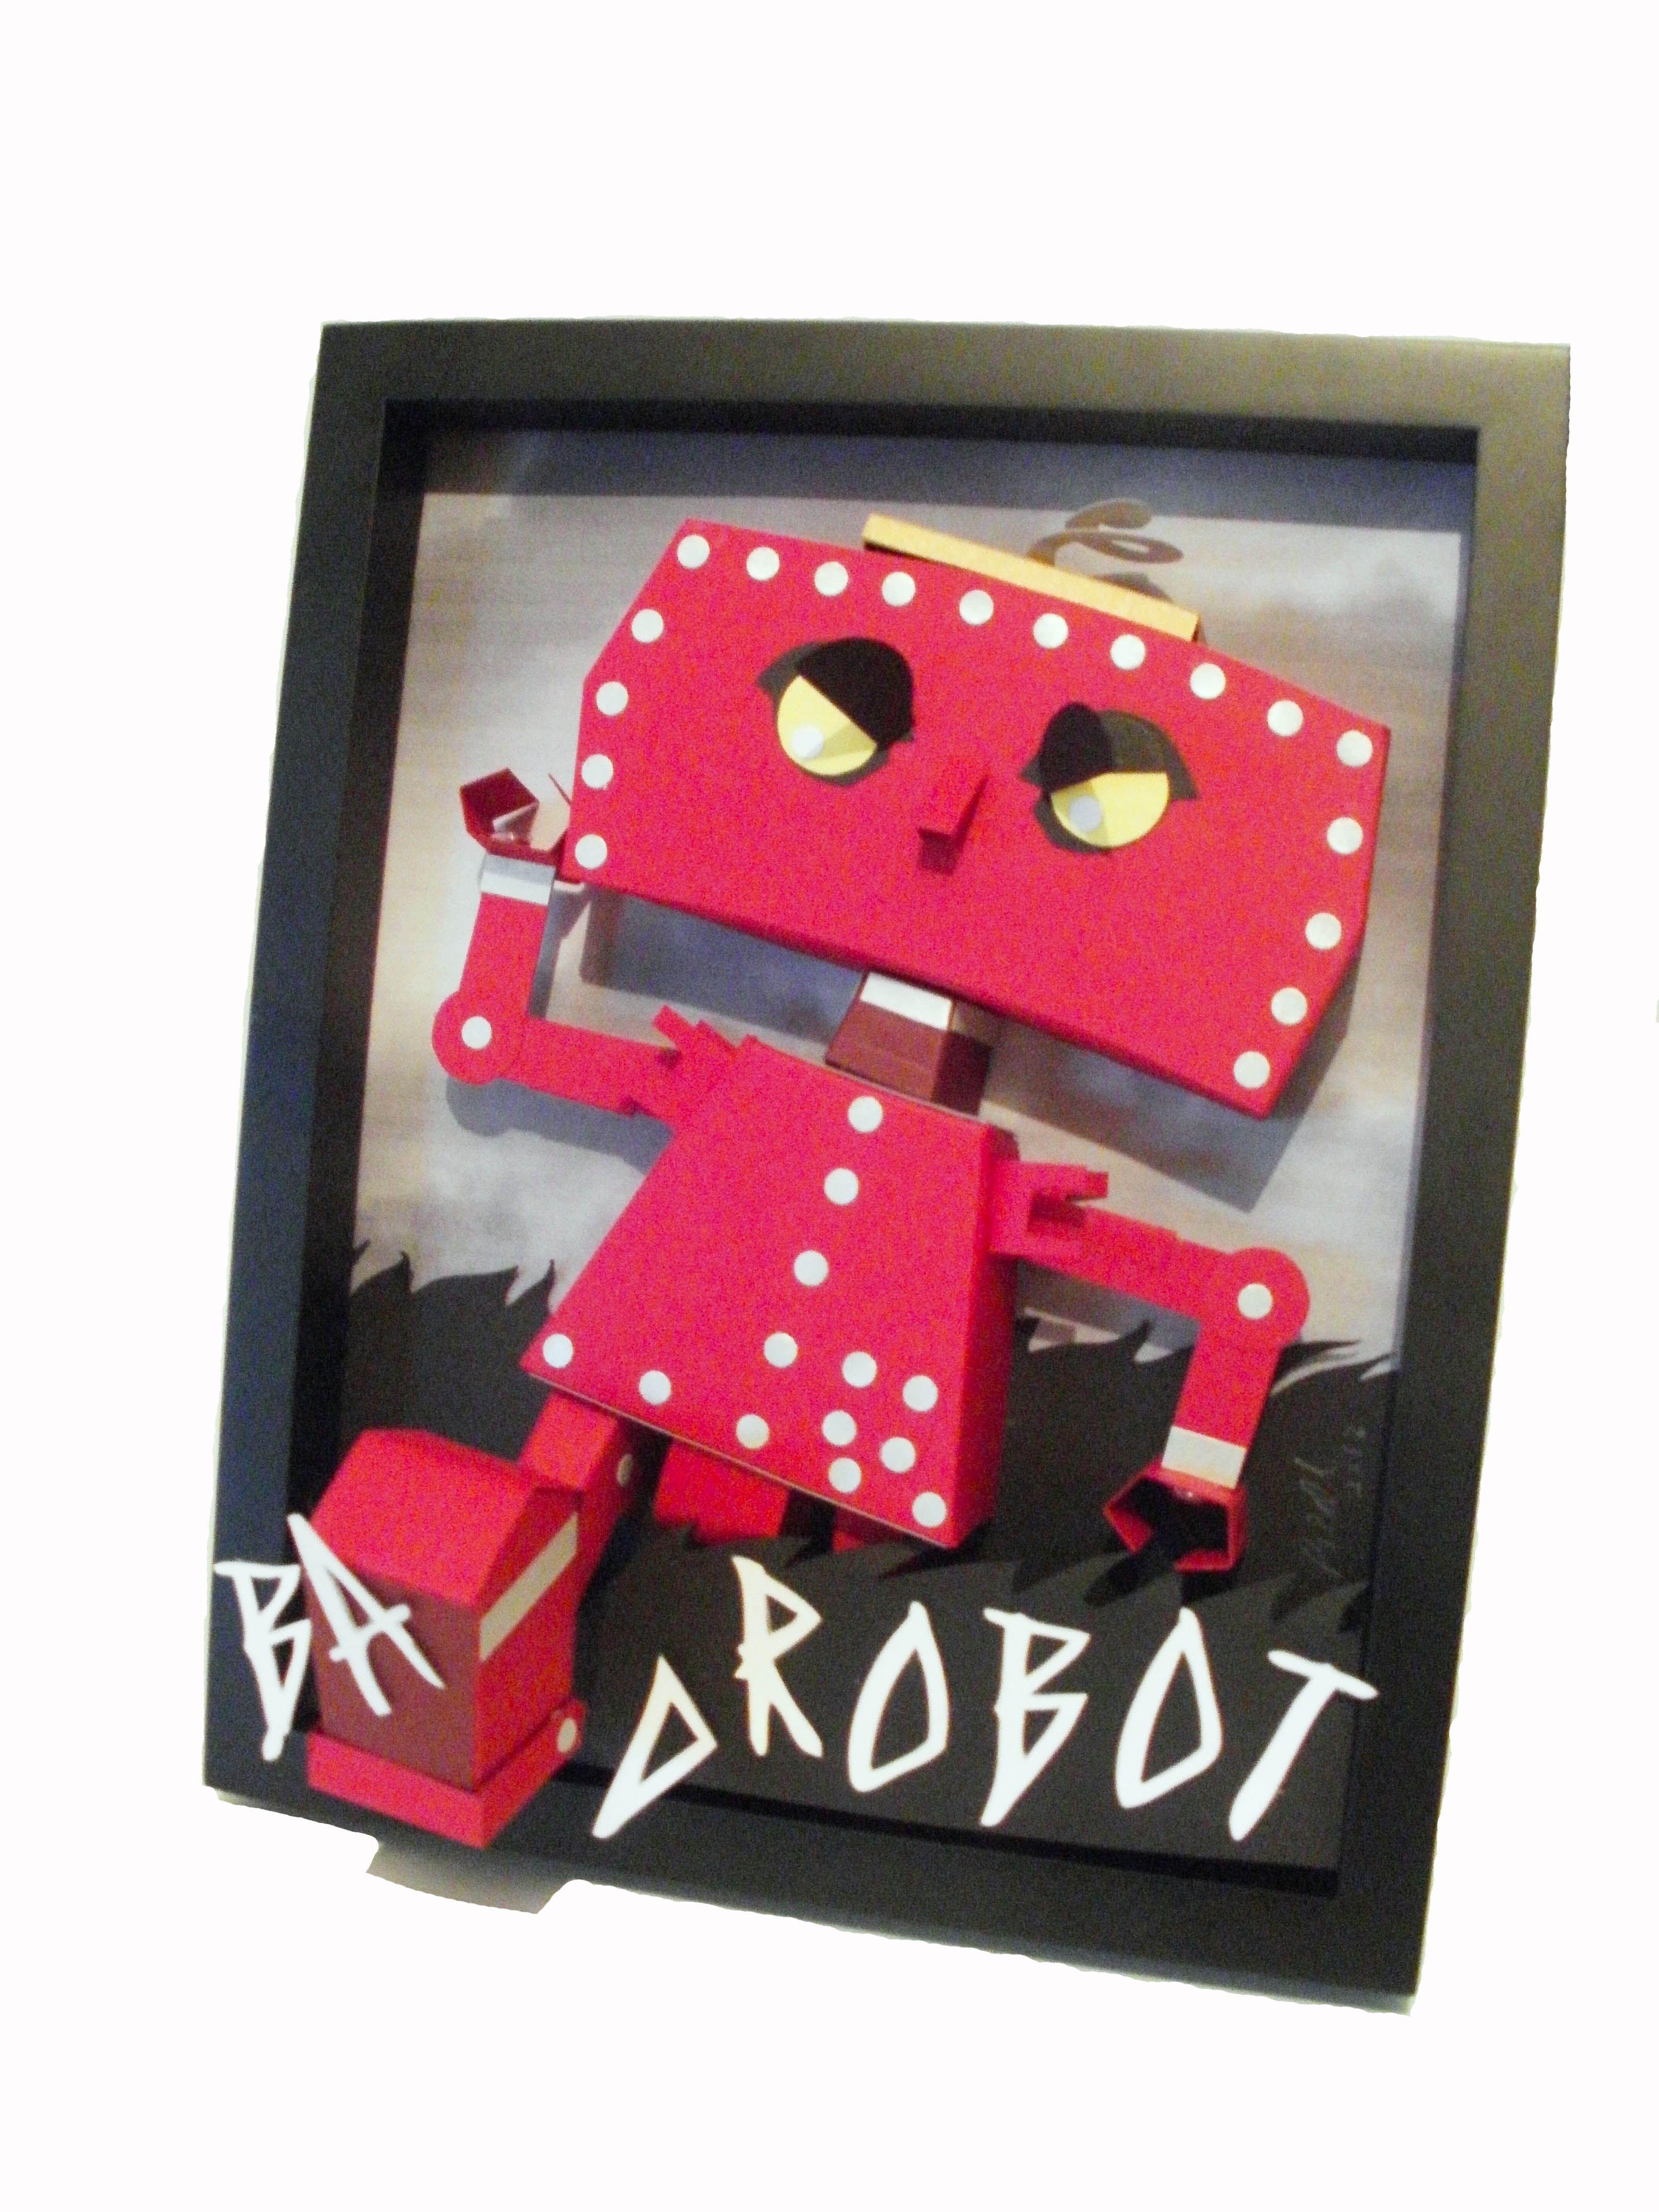 Bad Robot Logo - Bad robot | Dougy74 Design